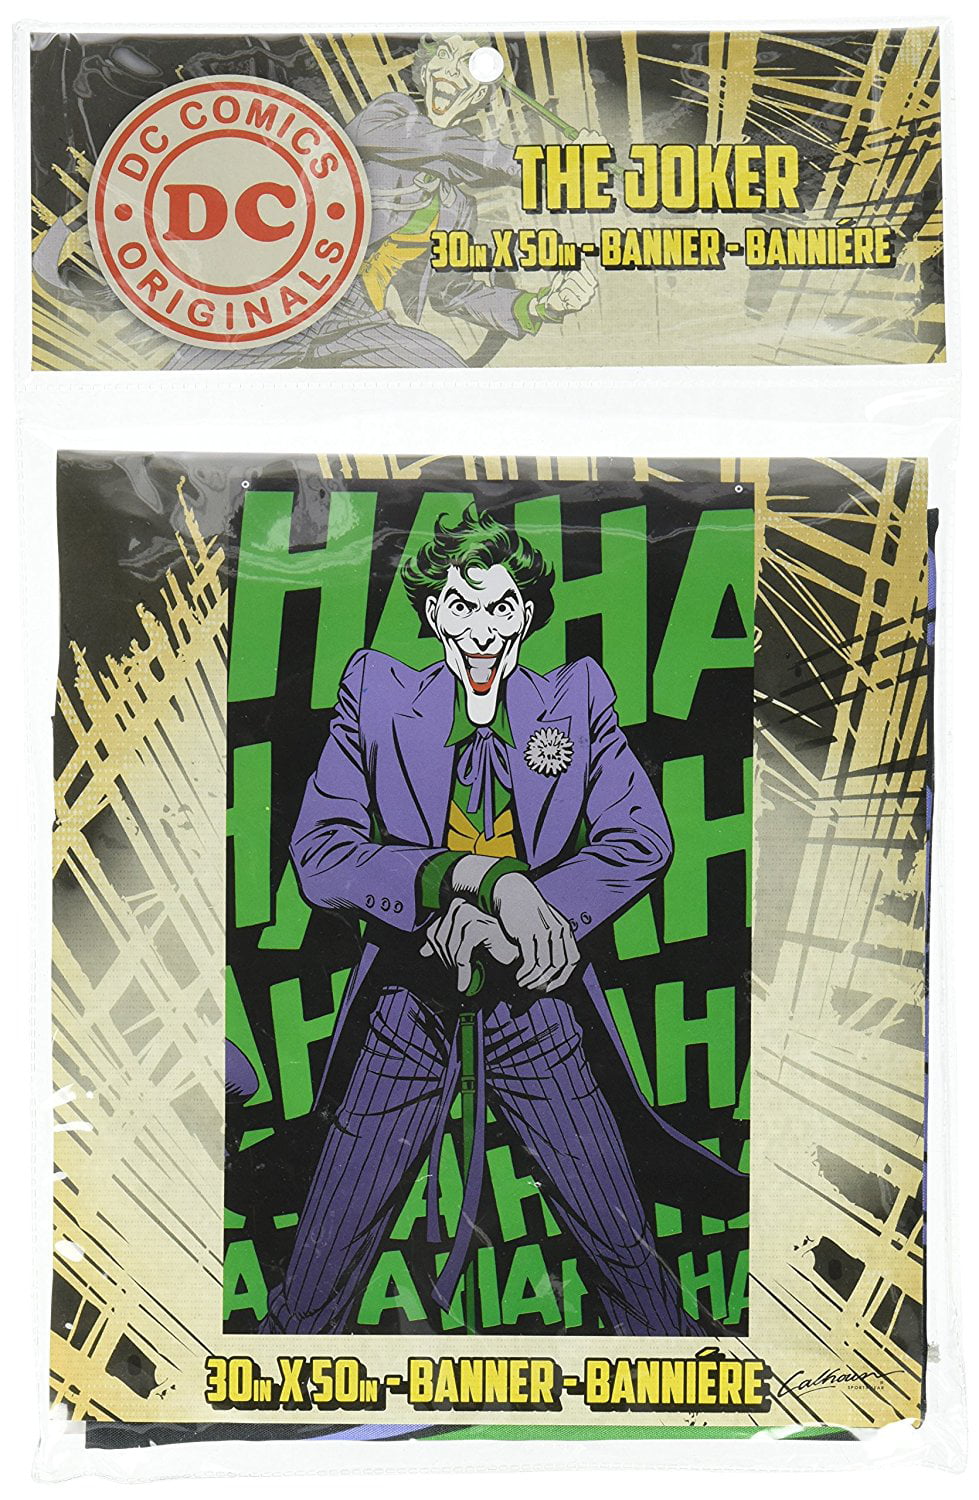 The Joker Picture Metal Tin Sign DC Comic Movie Villian Poster Room Decor Gift 